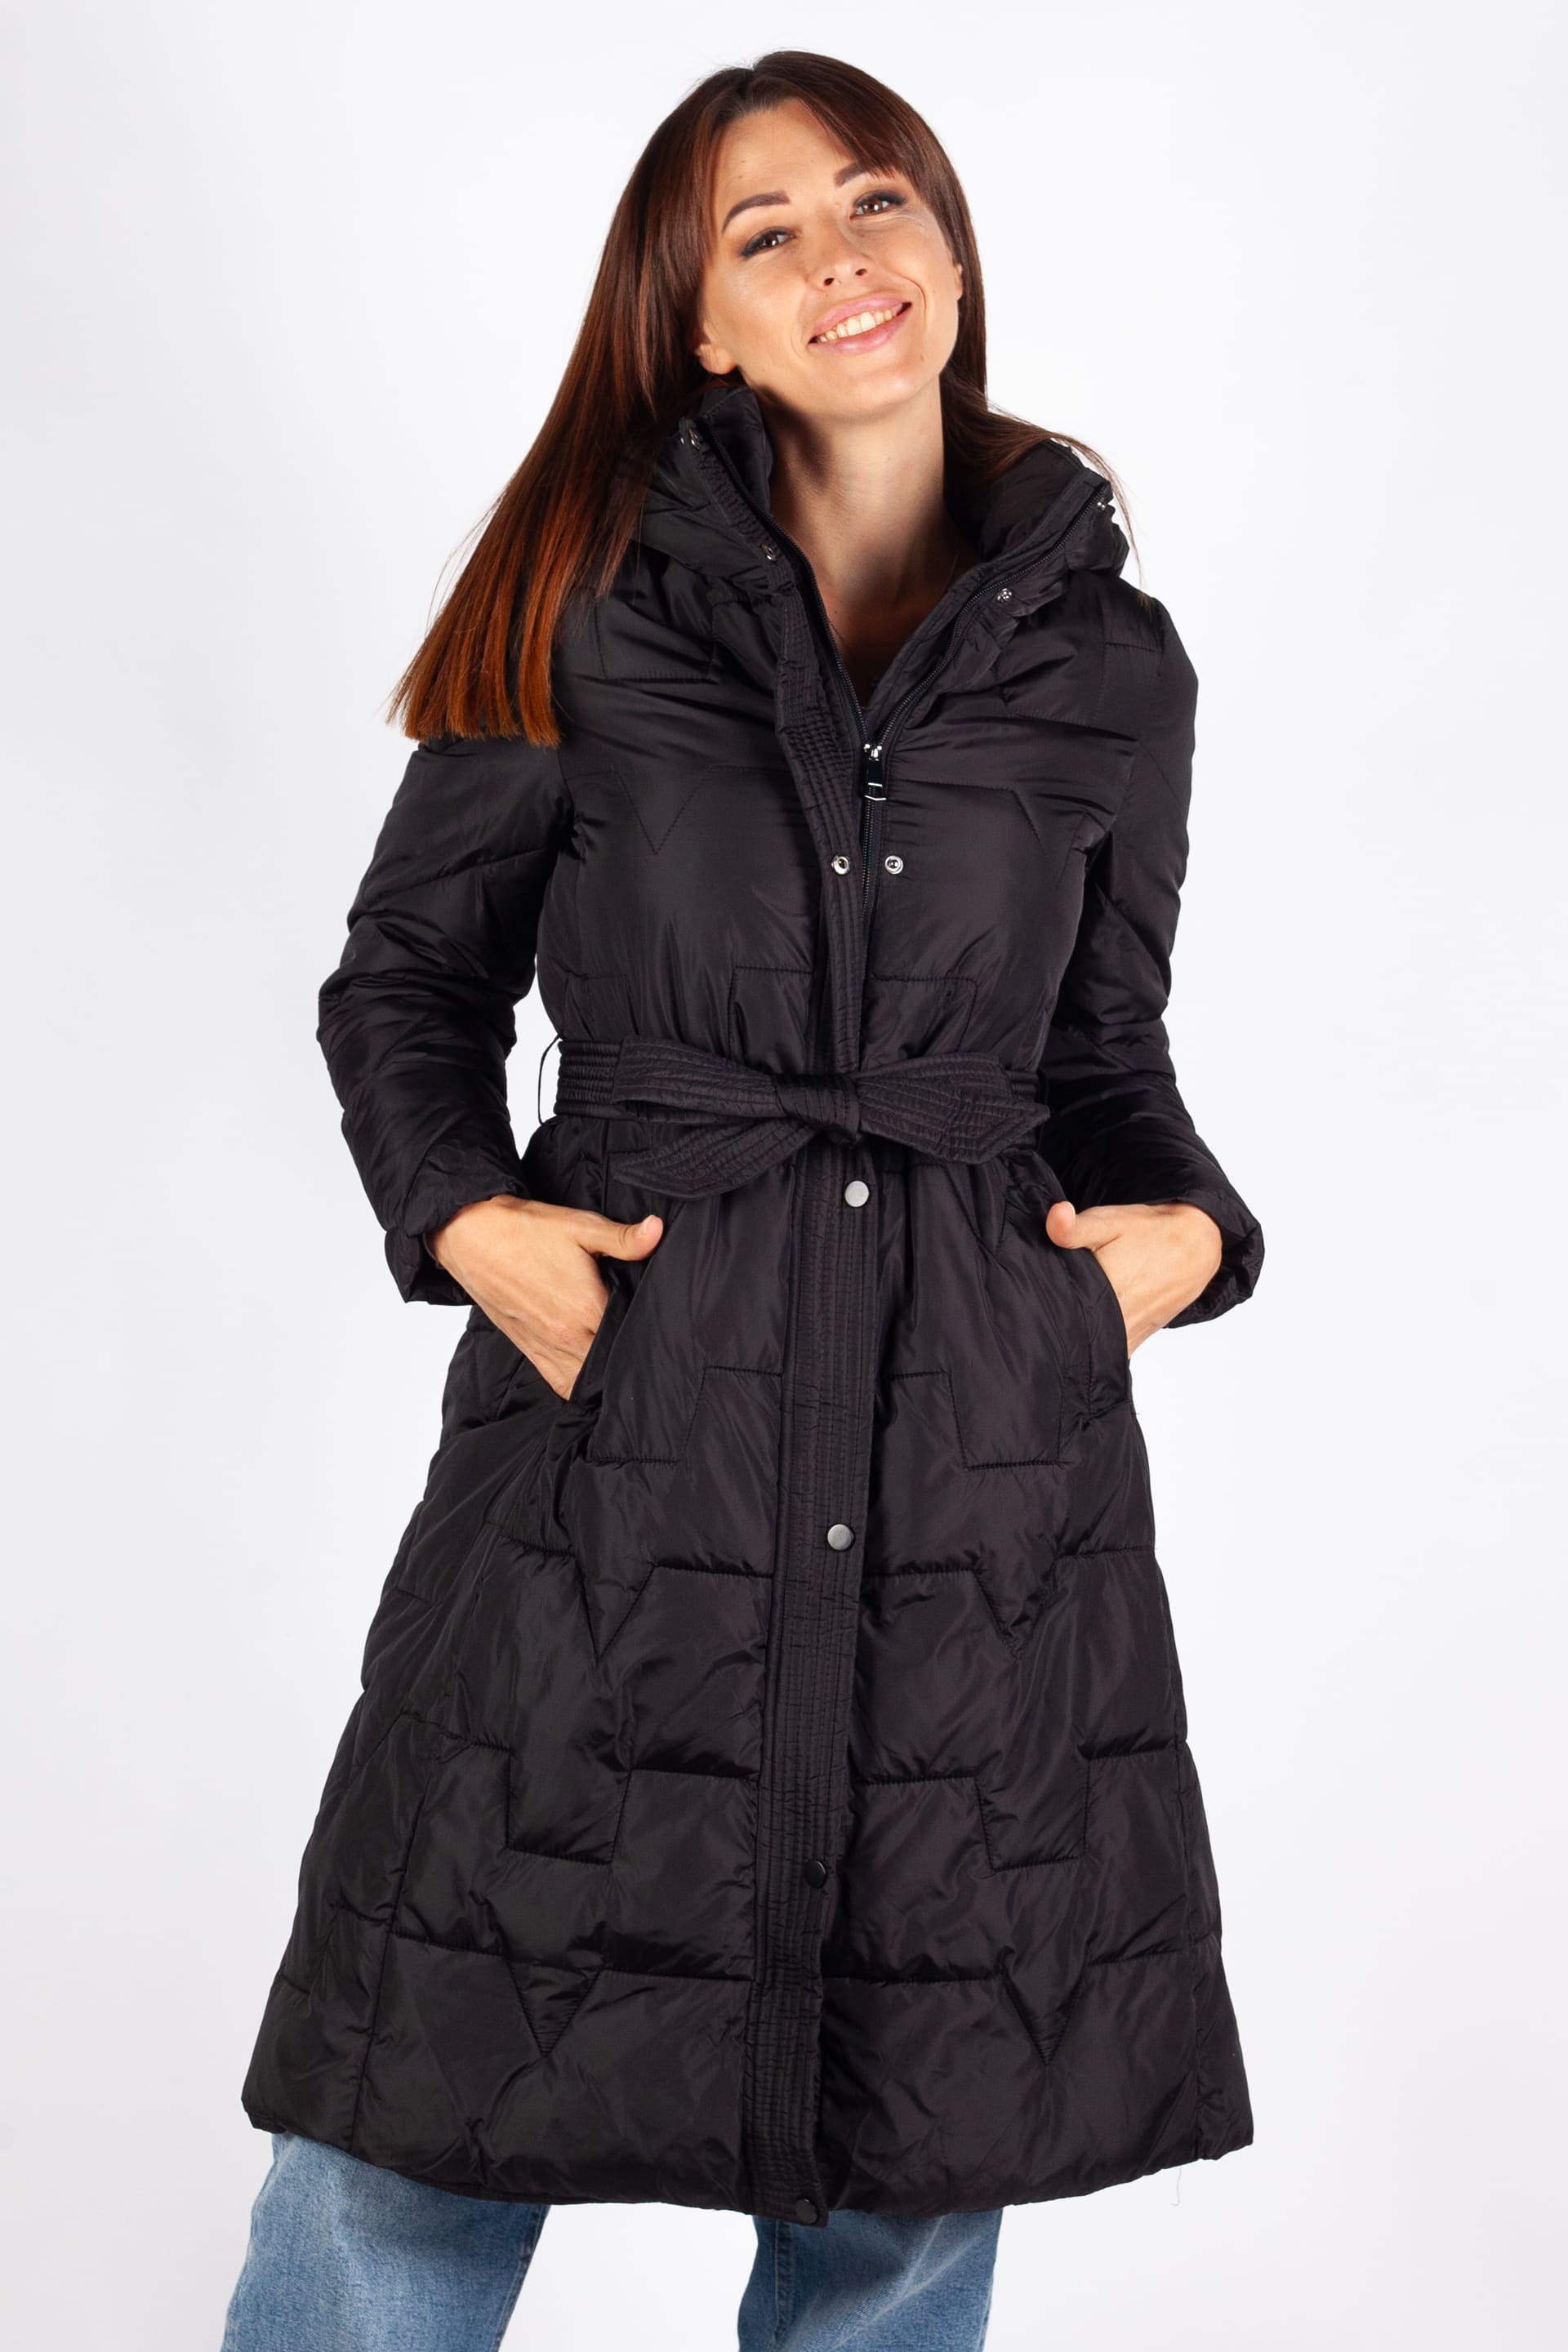 Winter jacket FLY 2265-BLACK